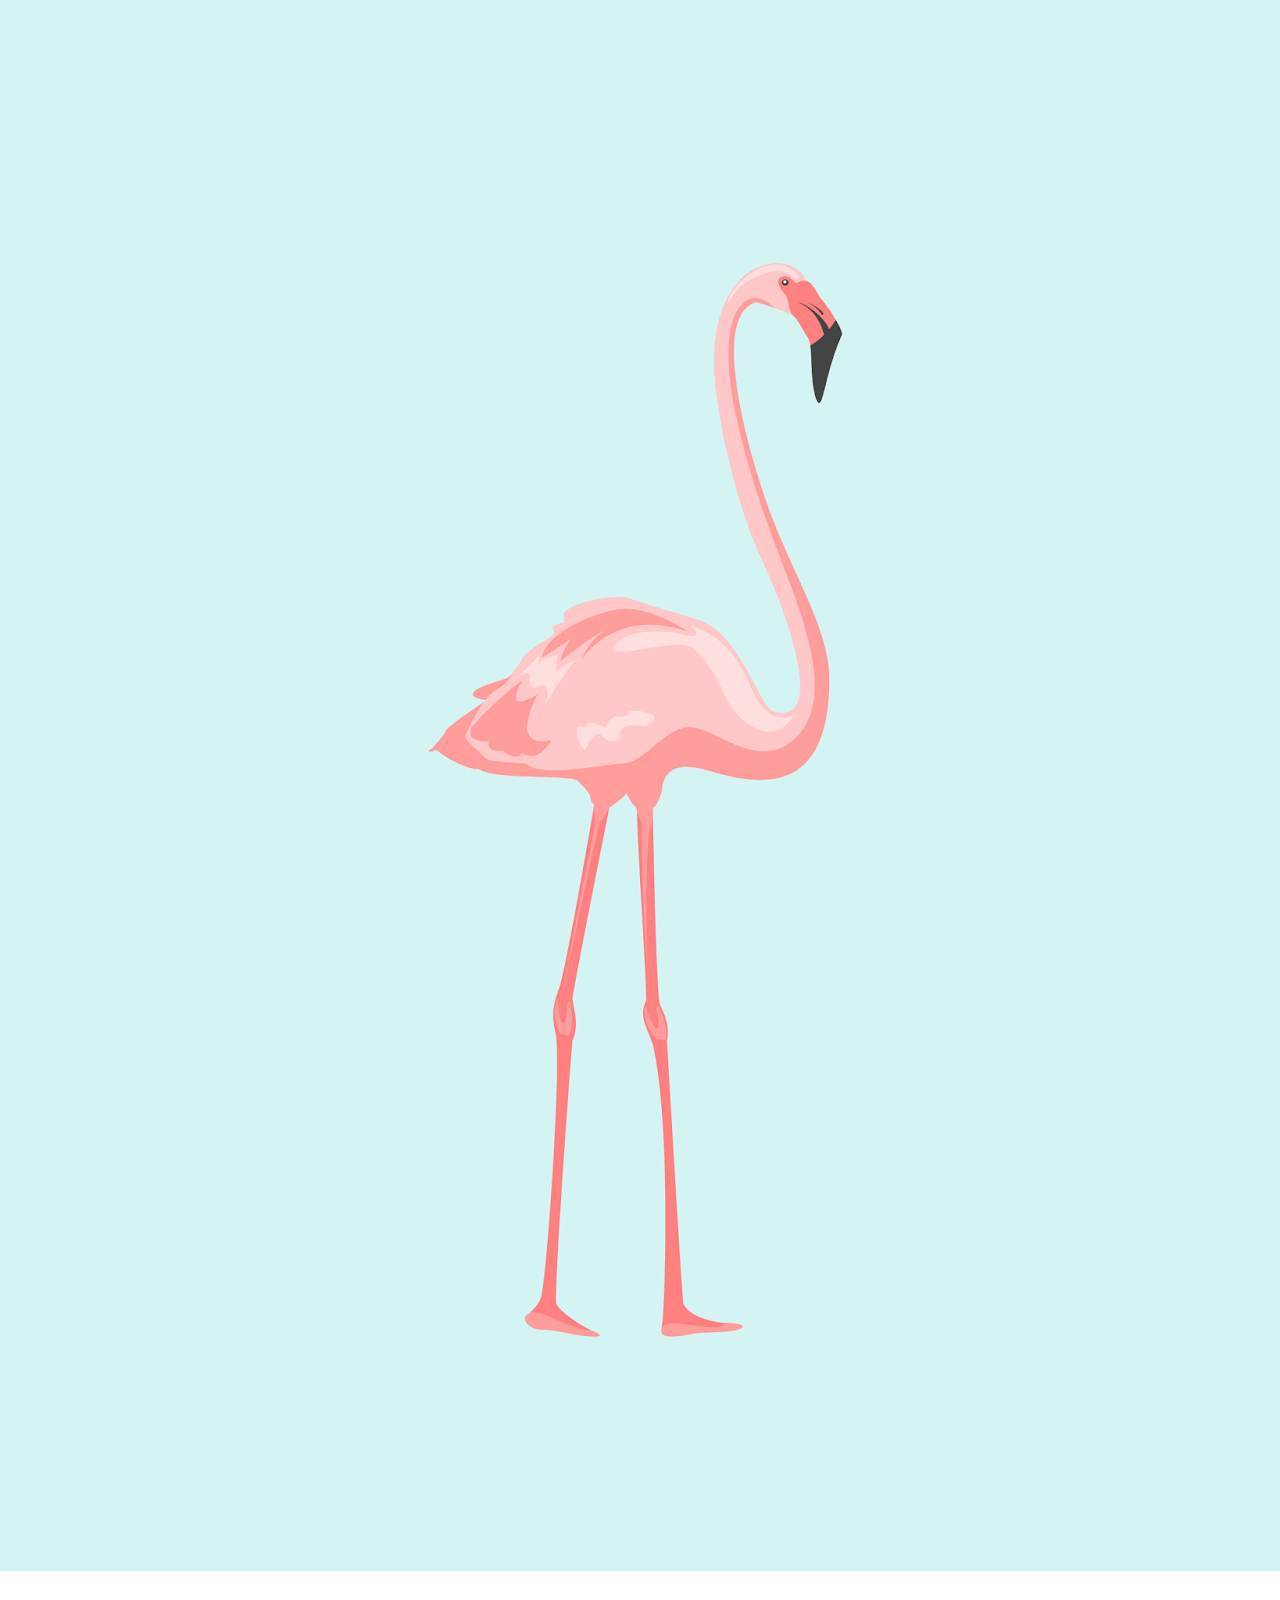 FREE flamingo printables — cute, fun, and cheerful!